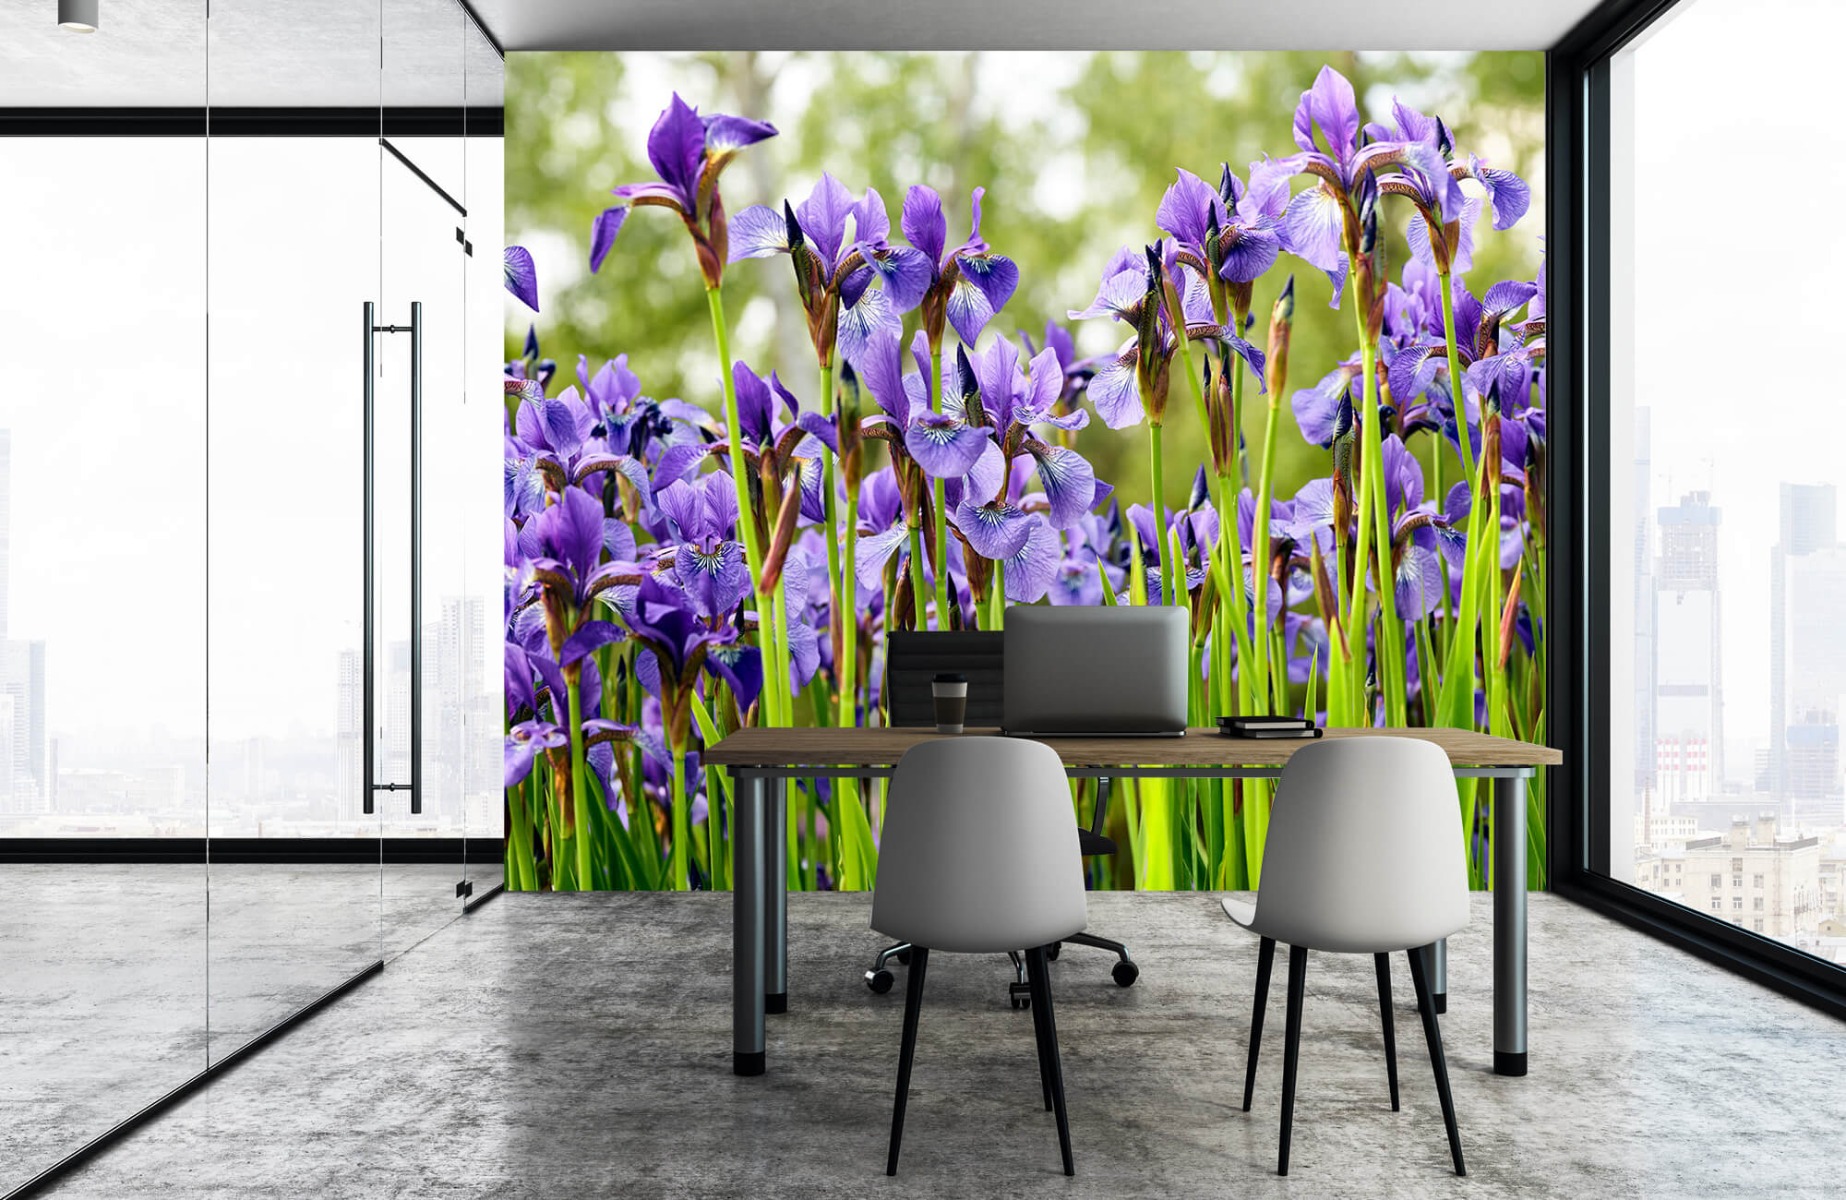 Flower fields - Irises  - Bedroom 4